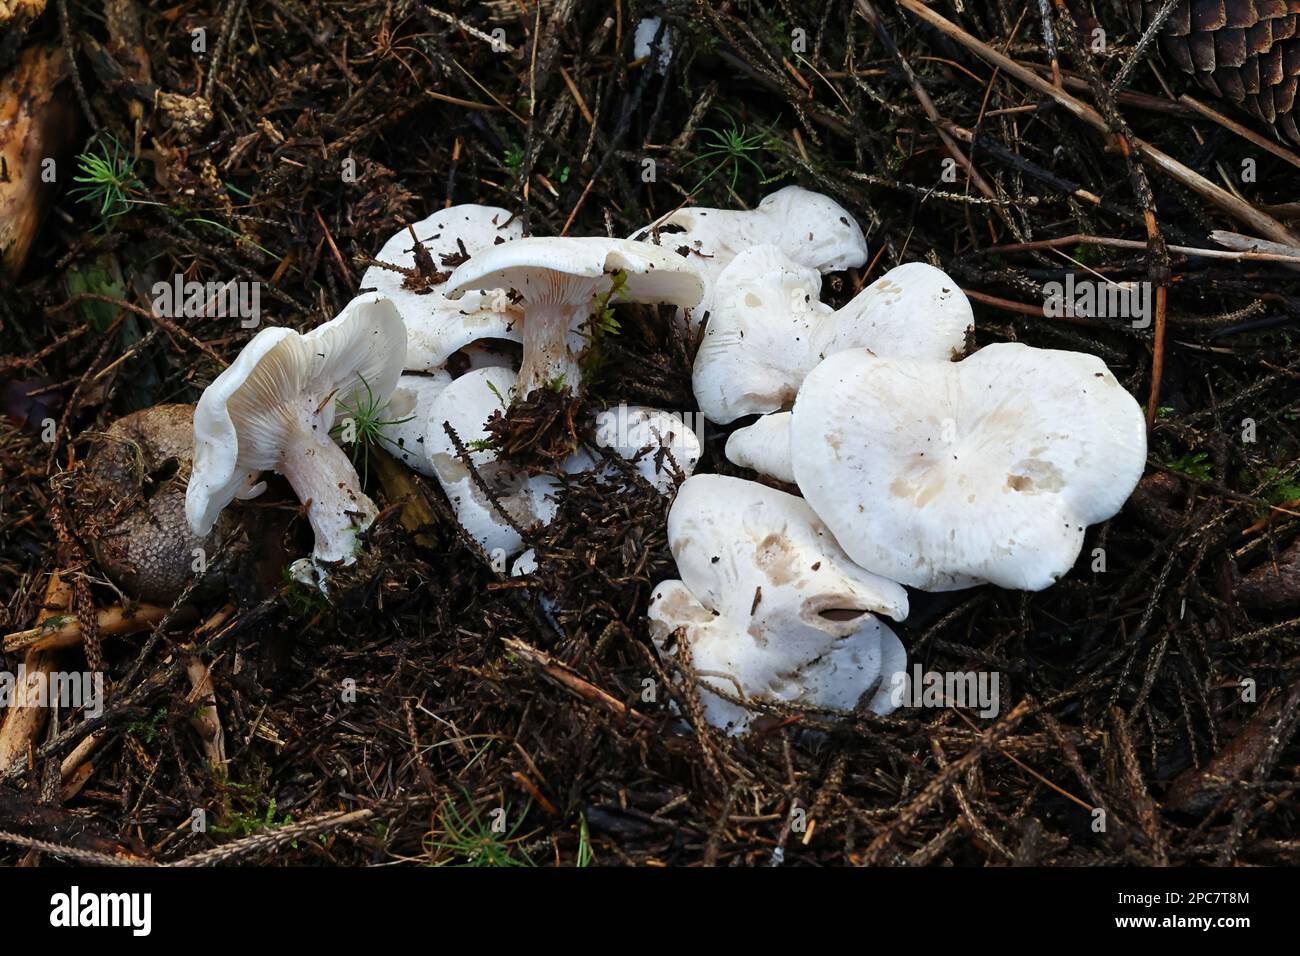 Lepista densifolia, also called Clitocybe densifolia, wild mushroom from Finland, no common English name Stock Photo